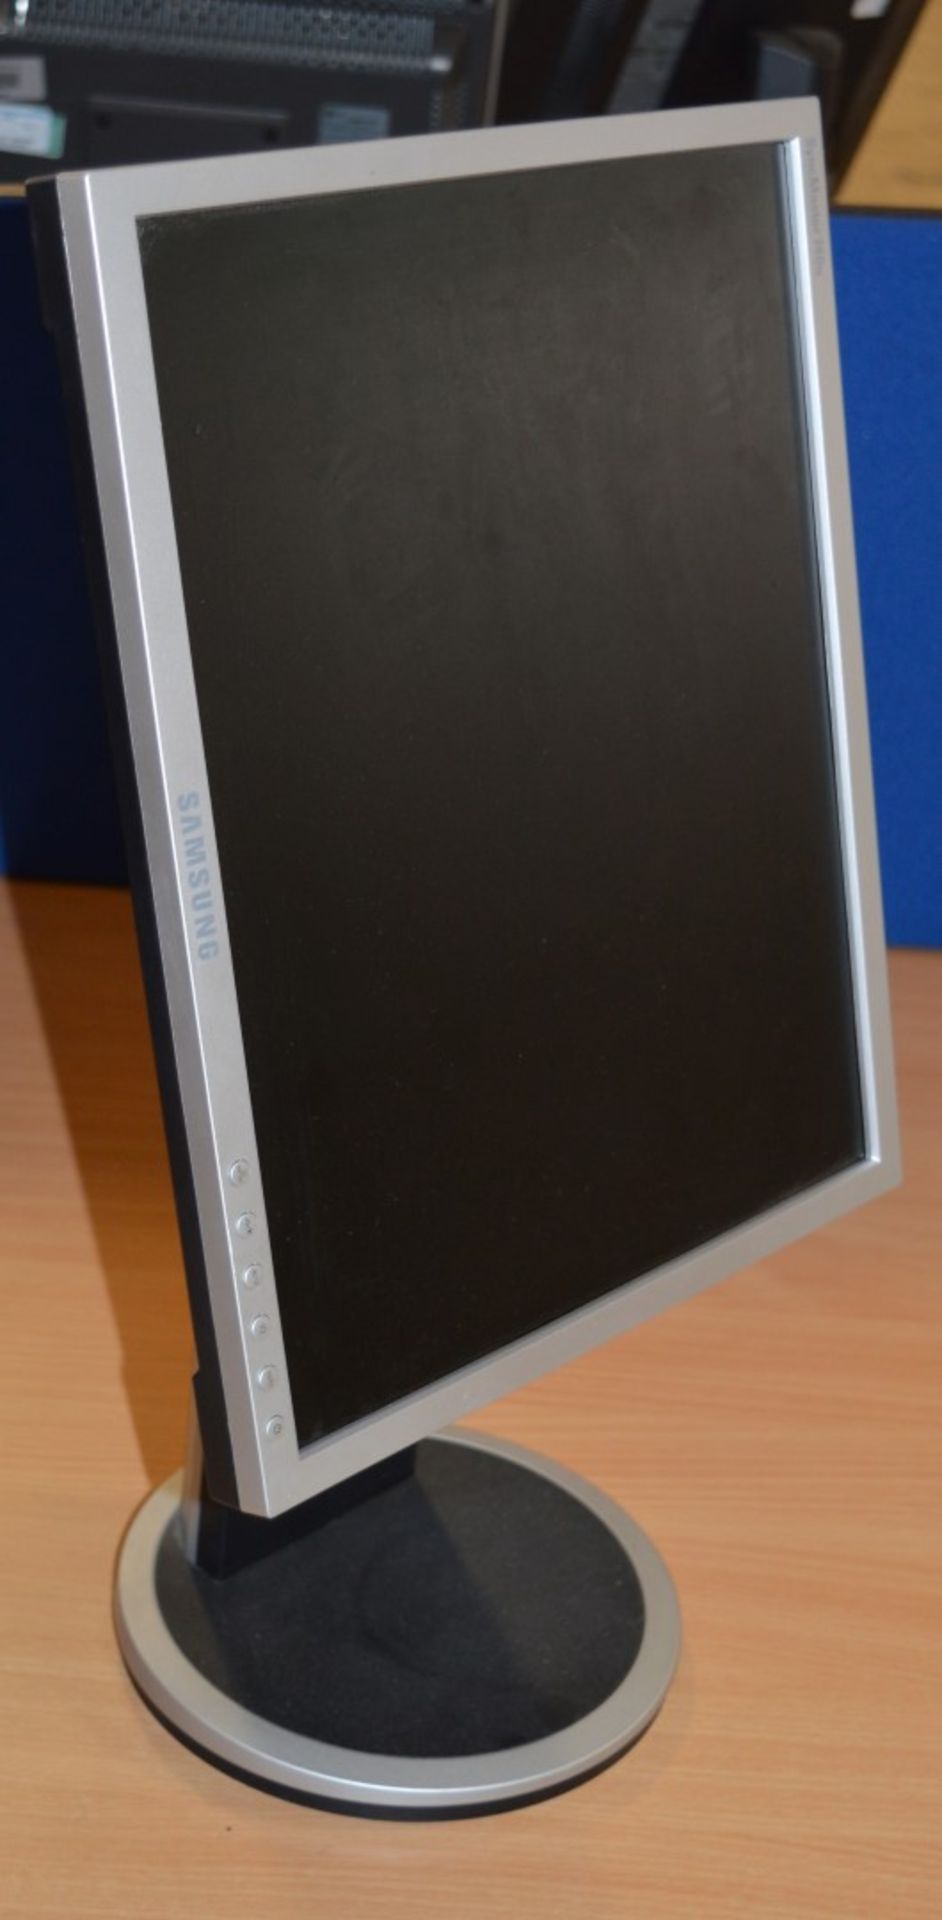 2 x Samsung Syncmaster 740N Flatscreen LCD MonitorS - 17 Inch Screen Size - 1280 x 1024 Native - Image 3 of 5